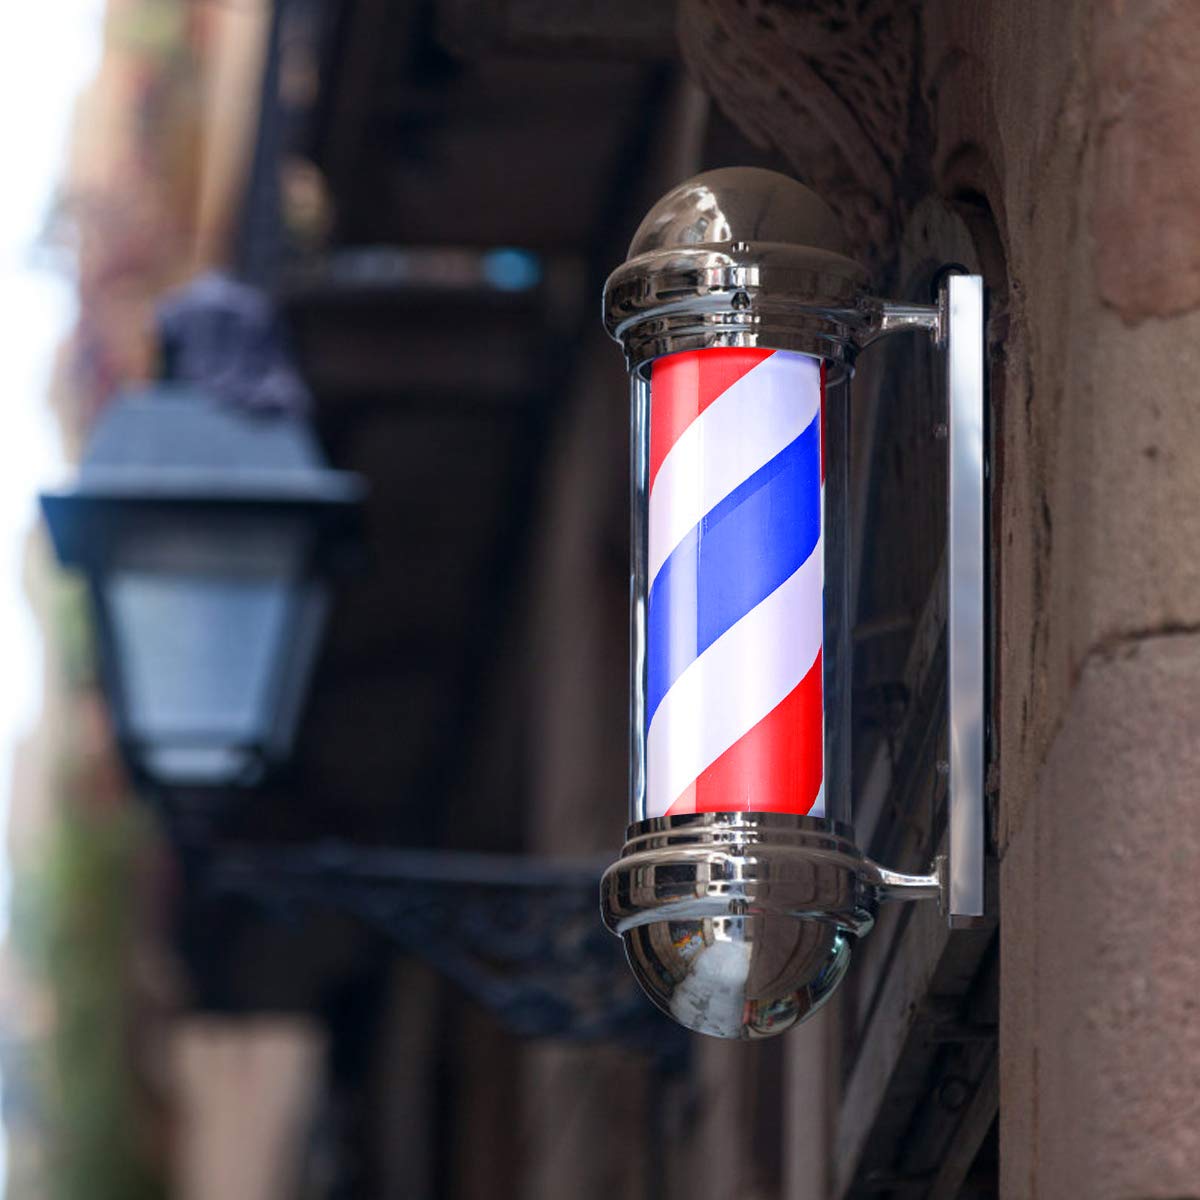 Giantex 30" Barber Shop Pole Red White Blue Rotating Light Stripes Sign Hair Salon